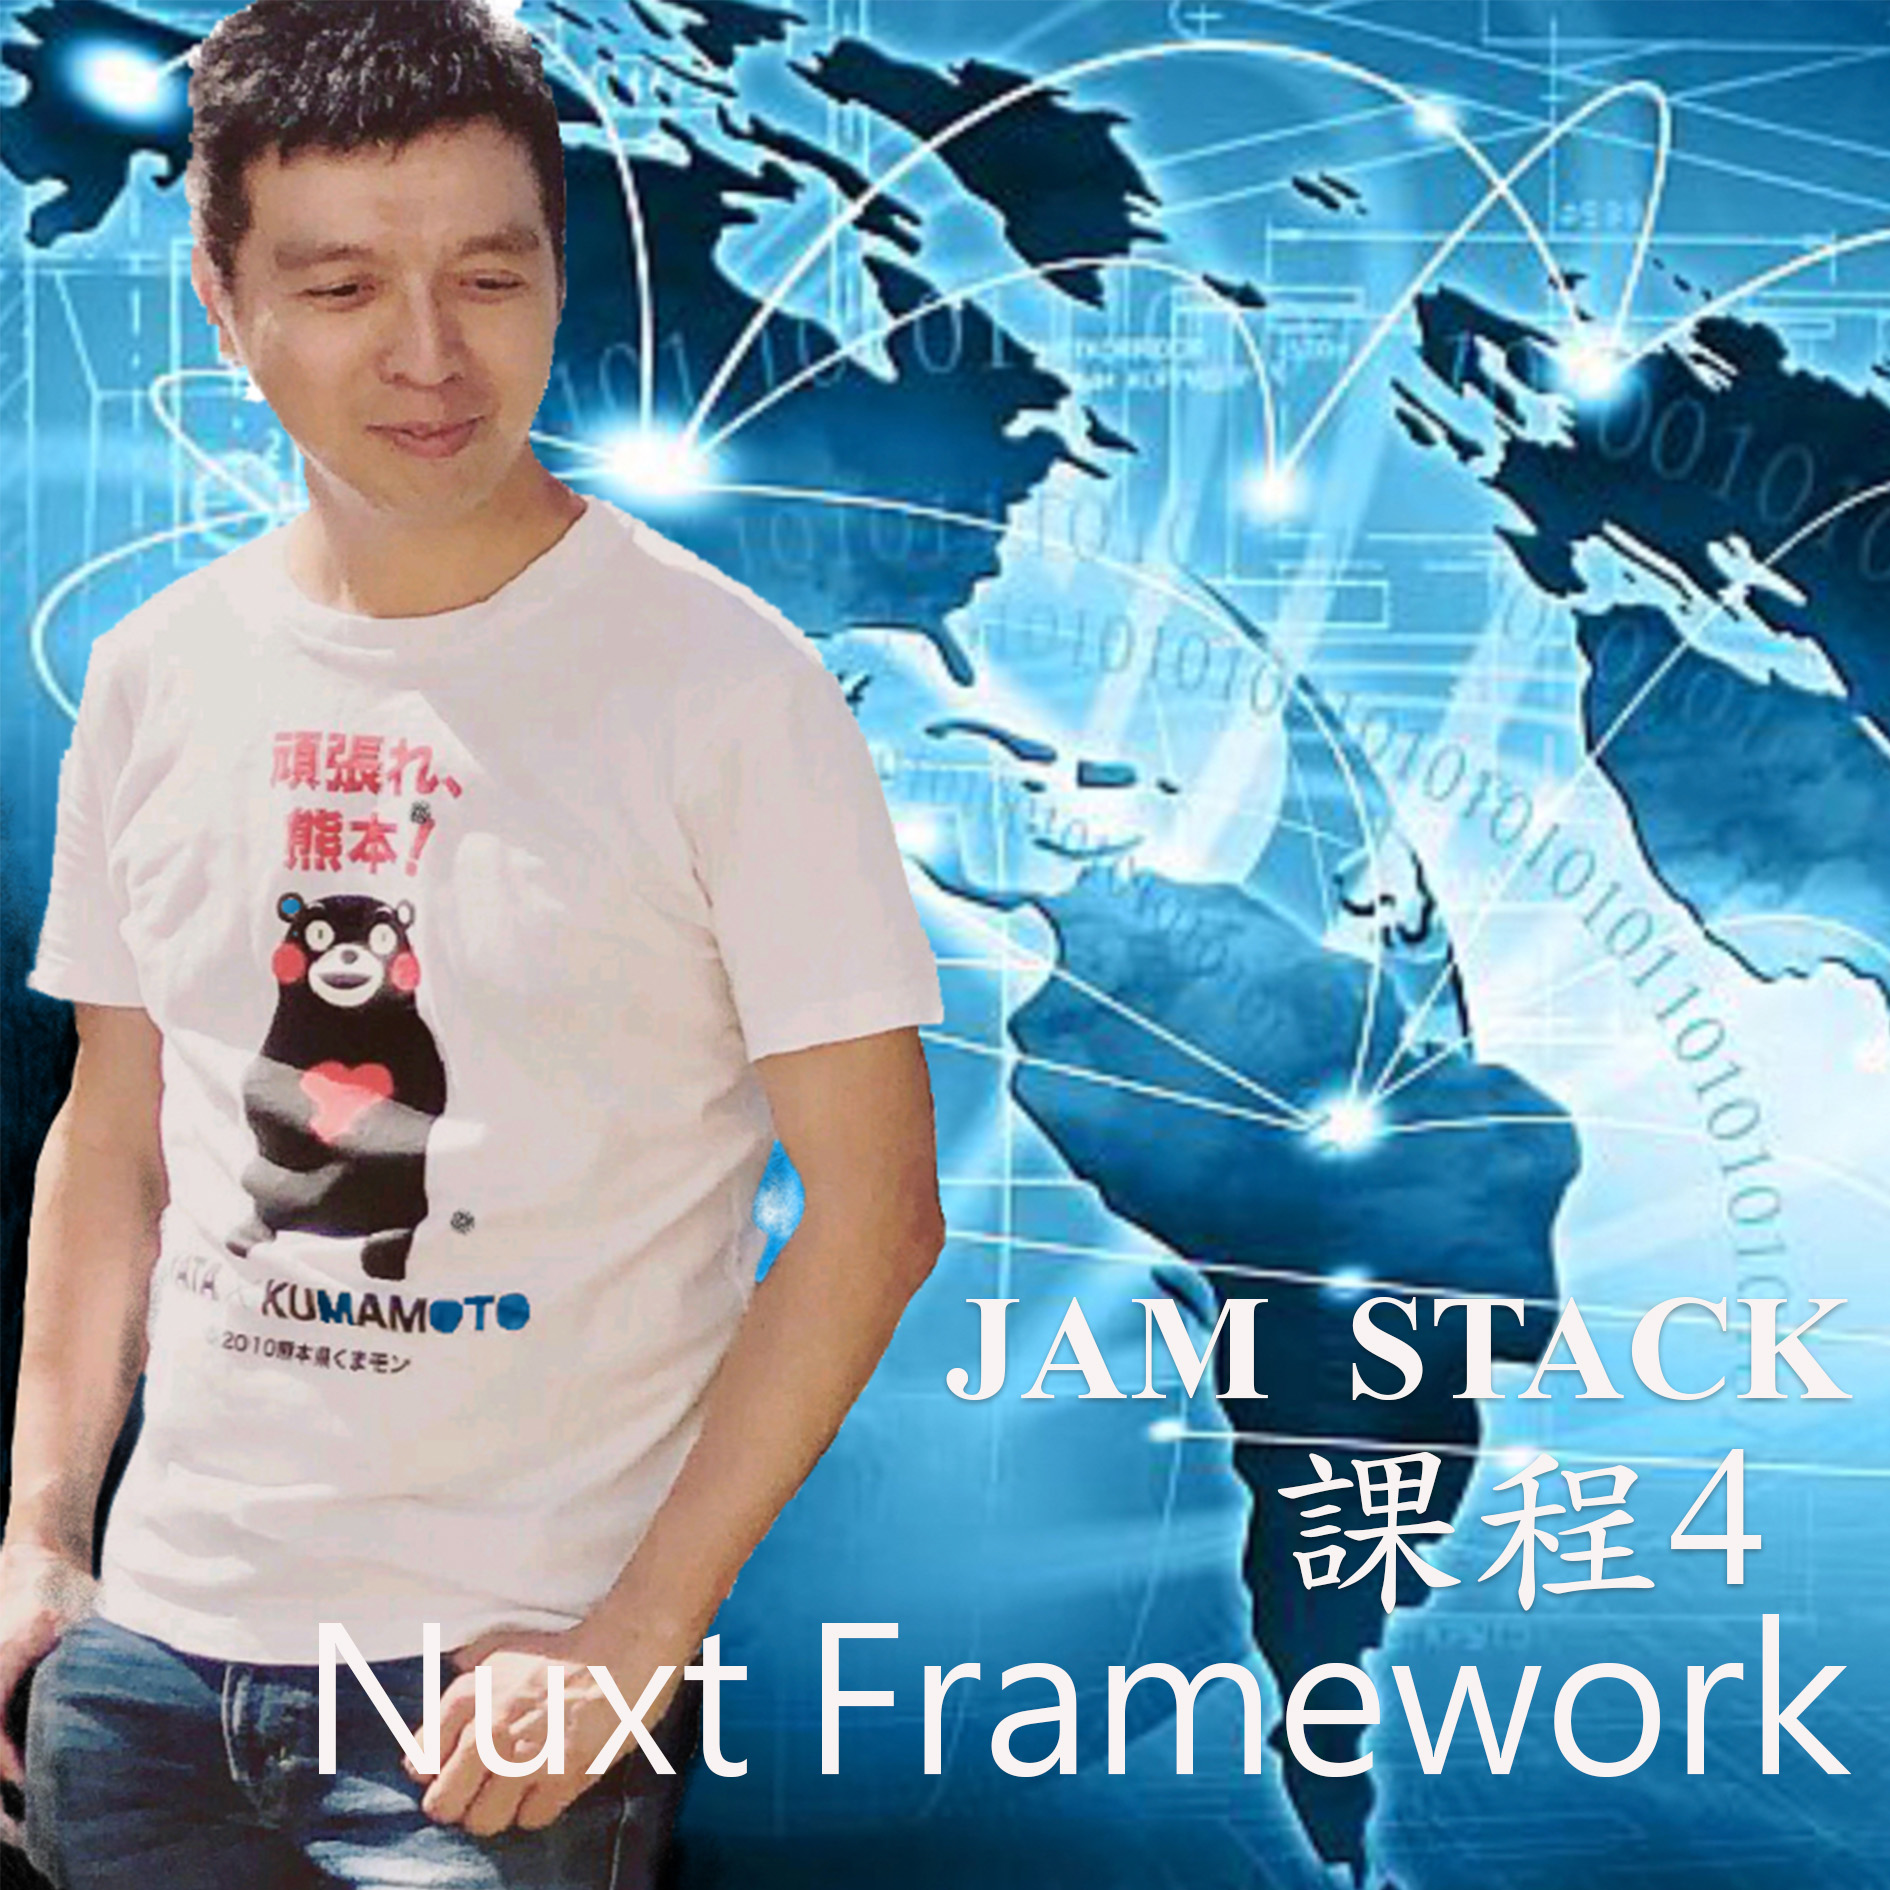 JAM STACK 架站課程 : 第四課 Nuxt Framework